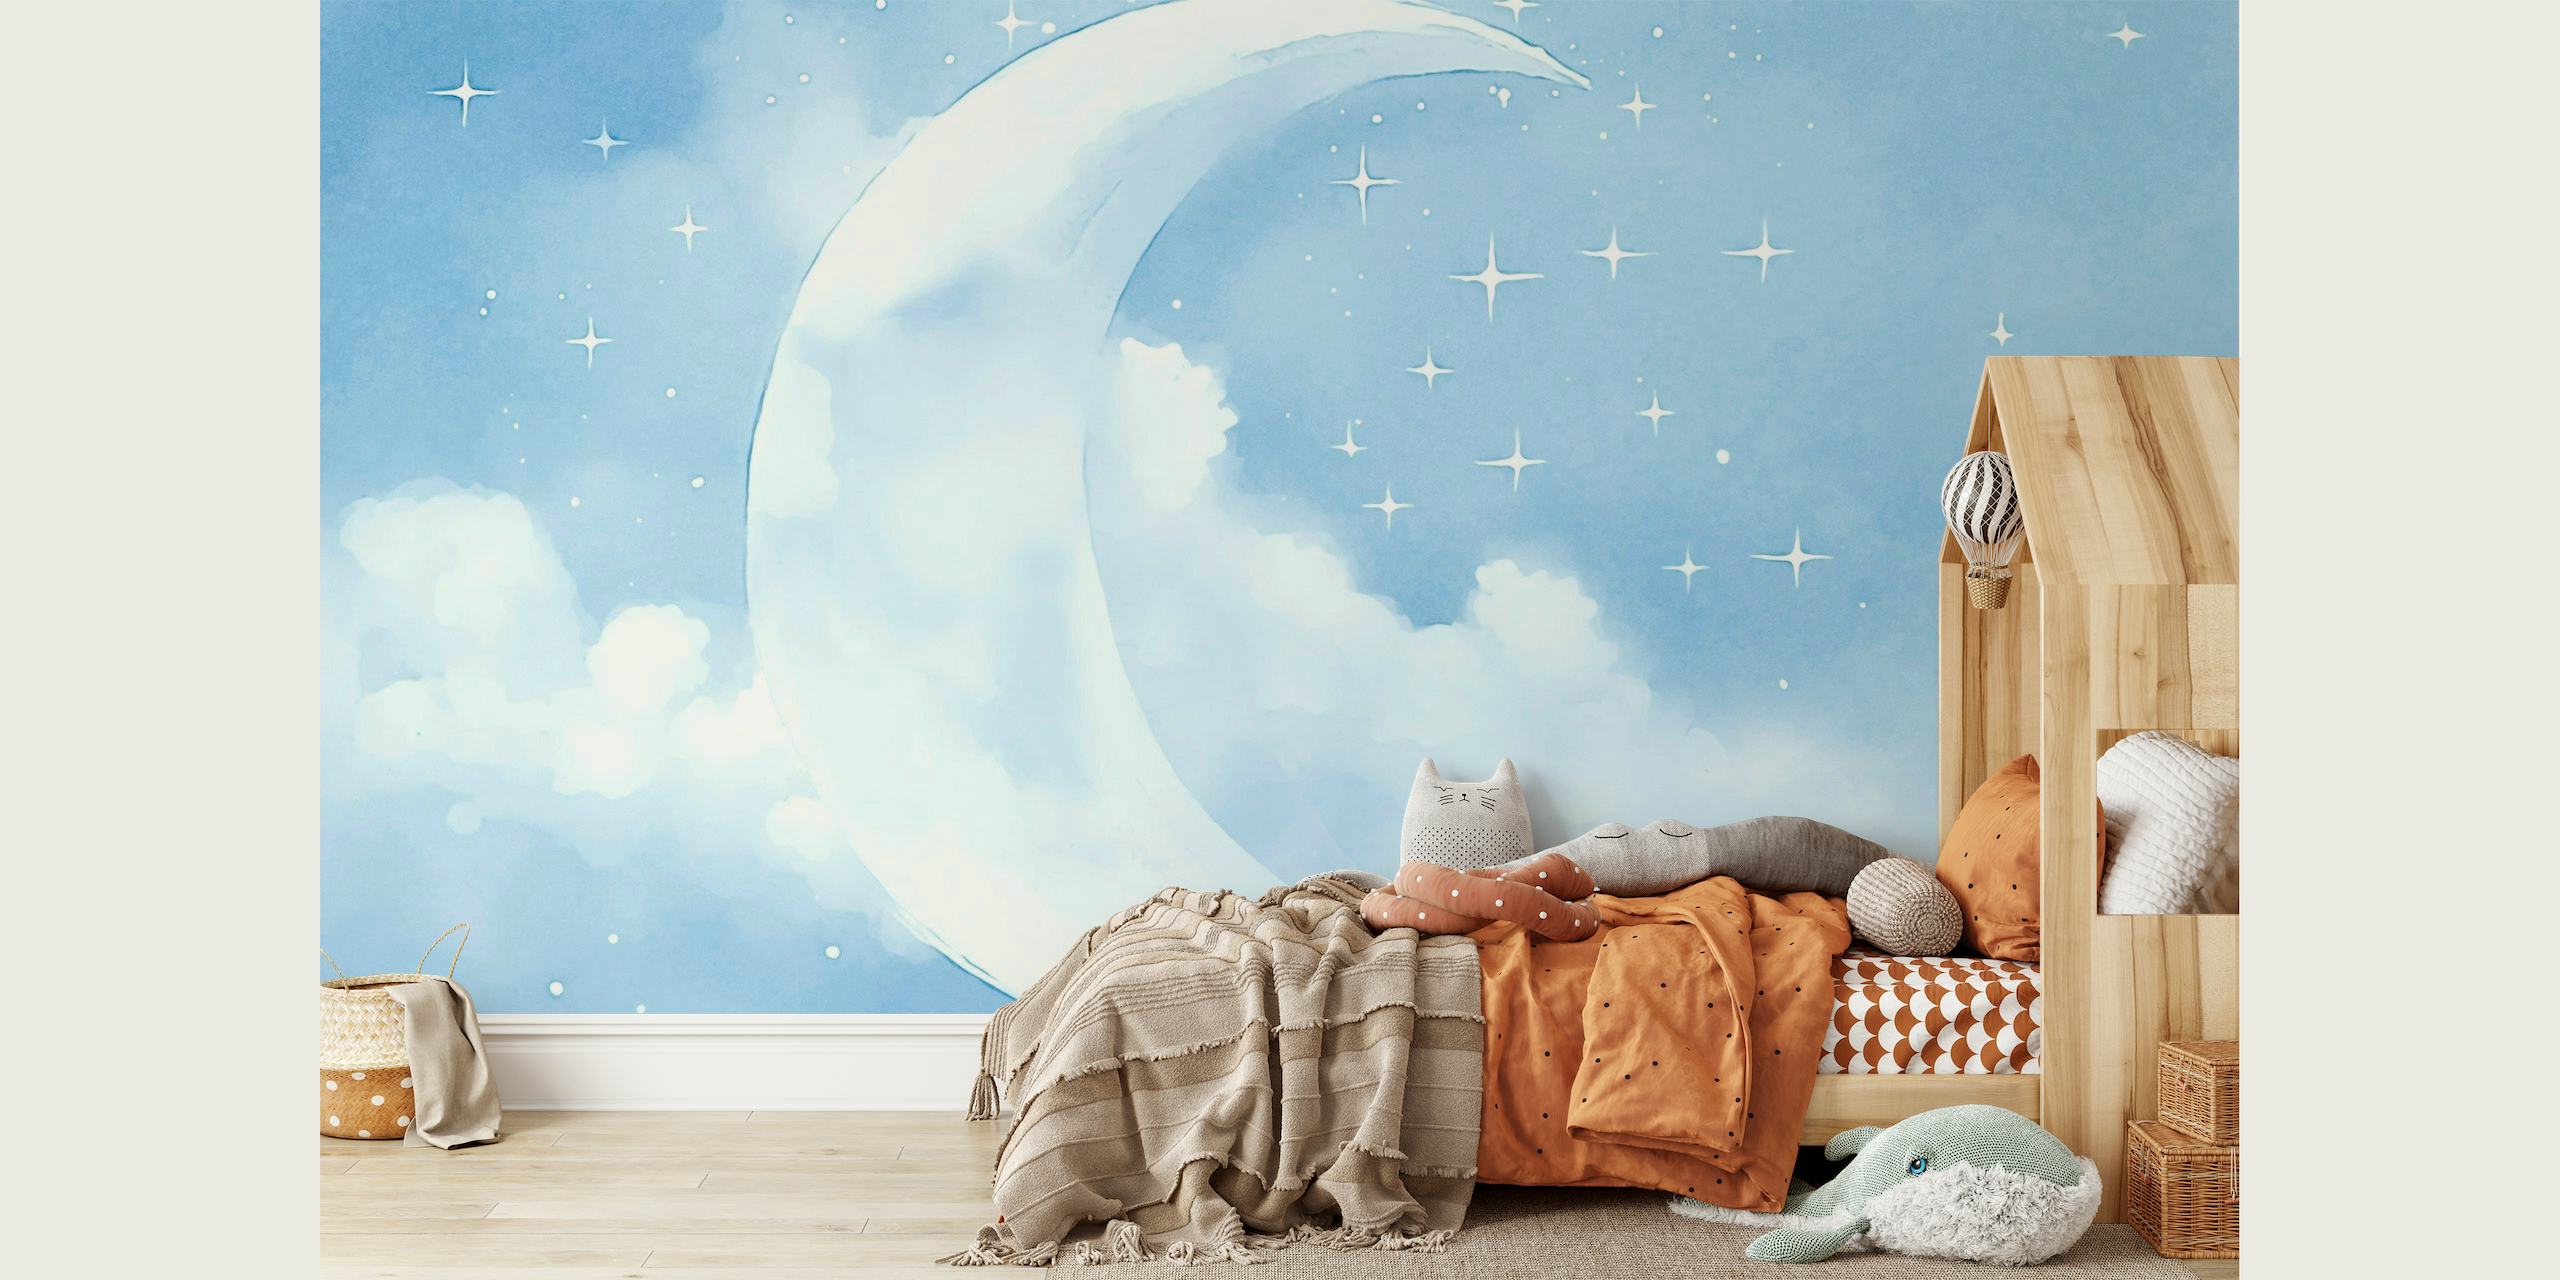 Sweet Dreams Crescent Moon papel pintado